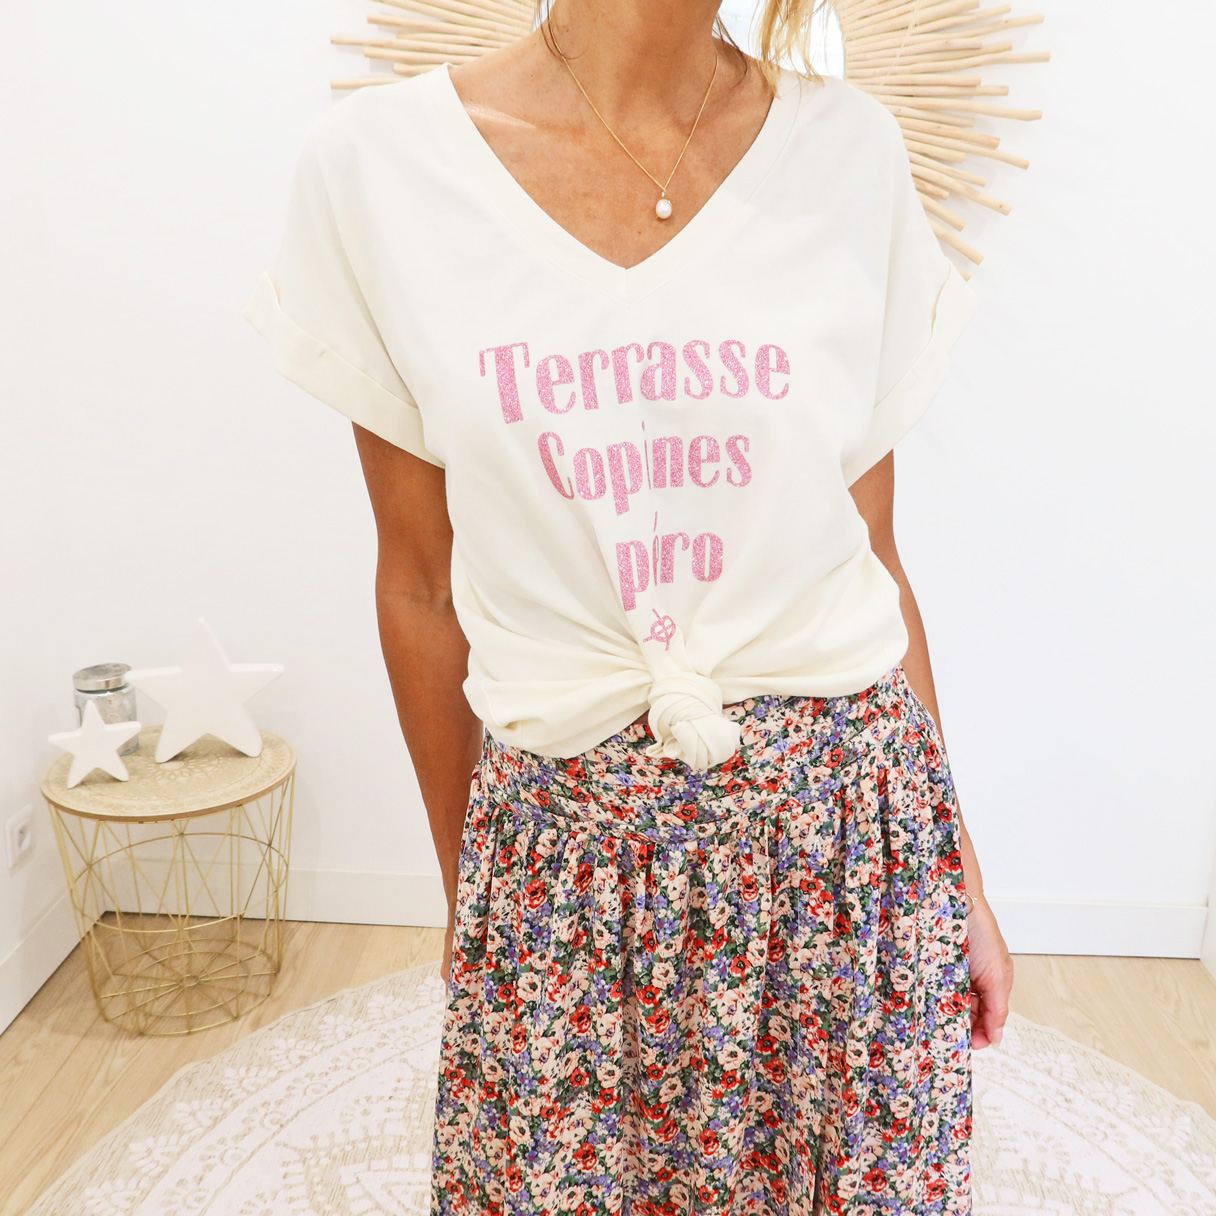 T-shirt Copines rose (Taille : TU - Couleur : Rose)